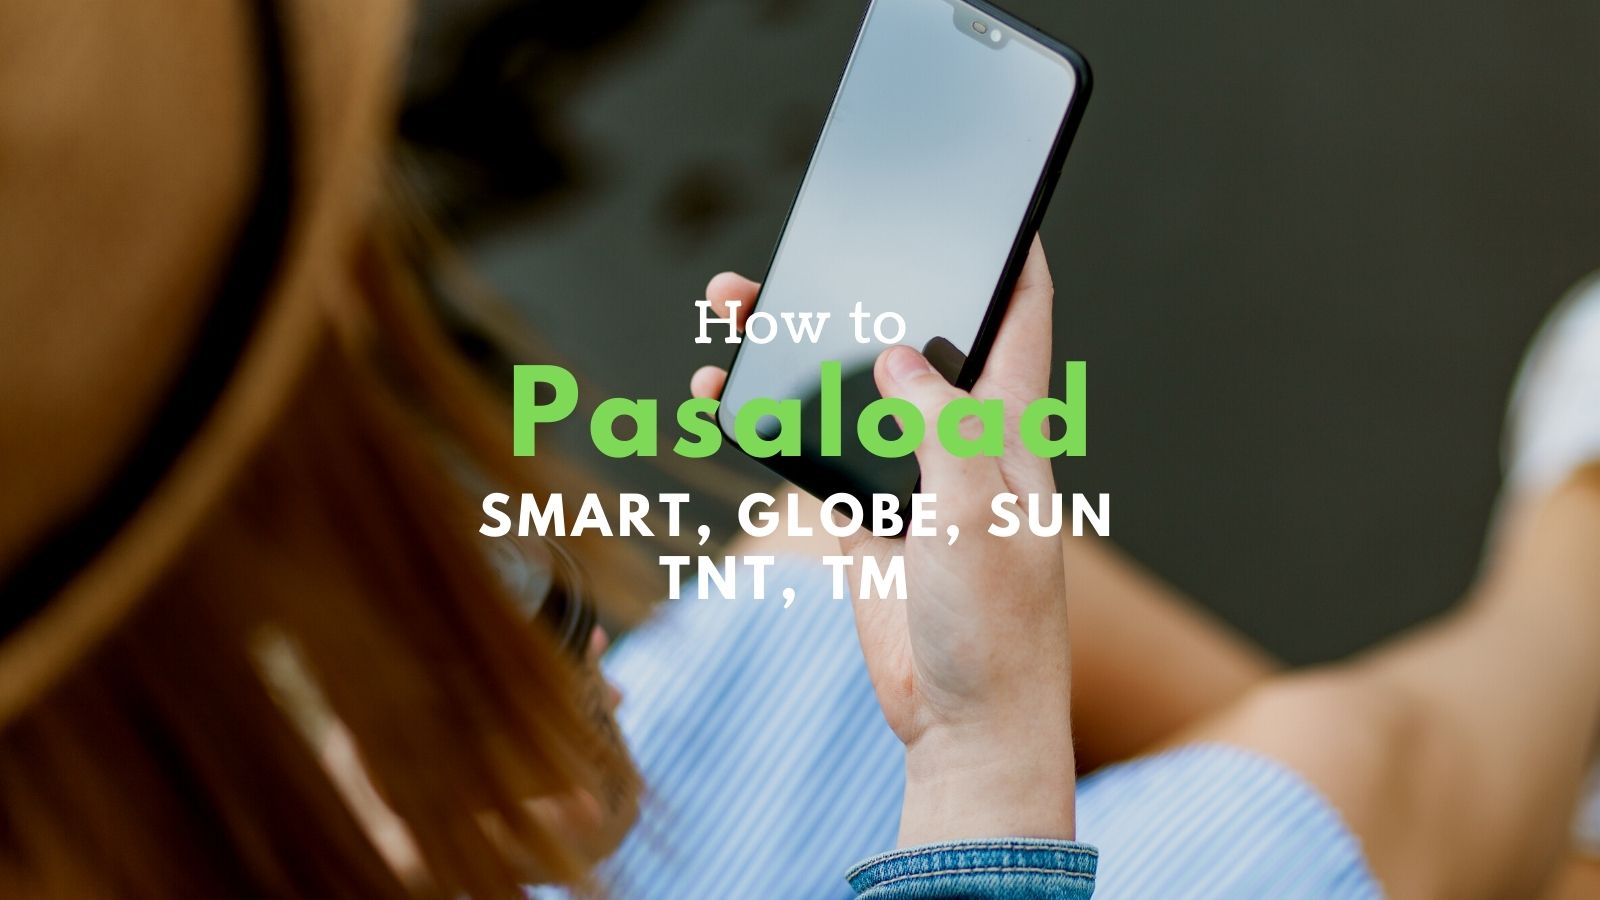 how to pasaload smart globe tm sun tnt dito